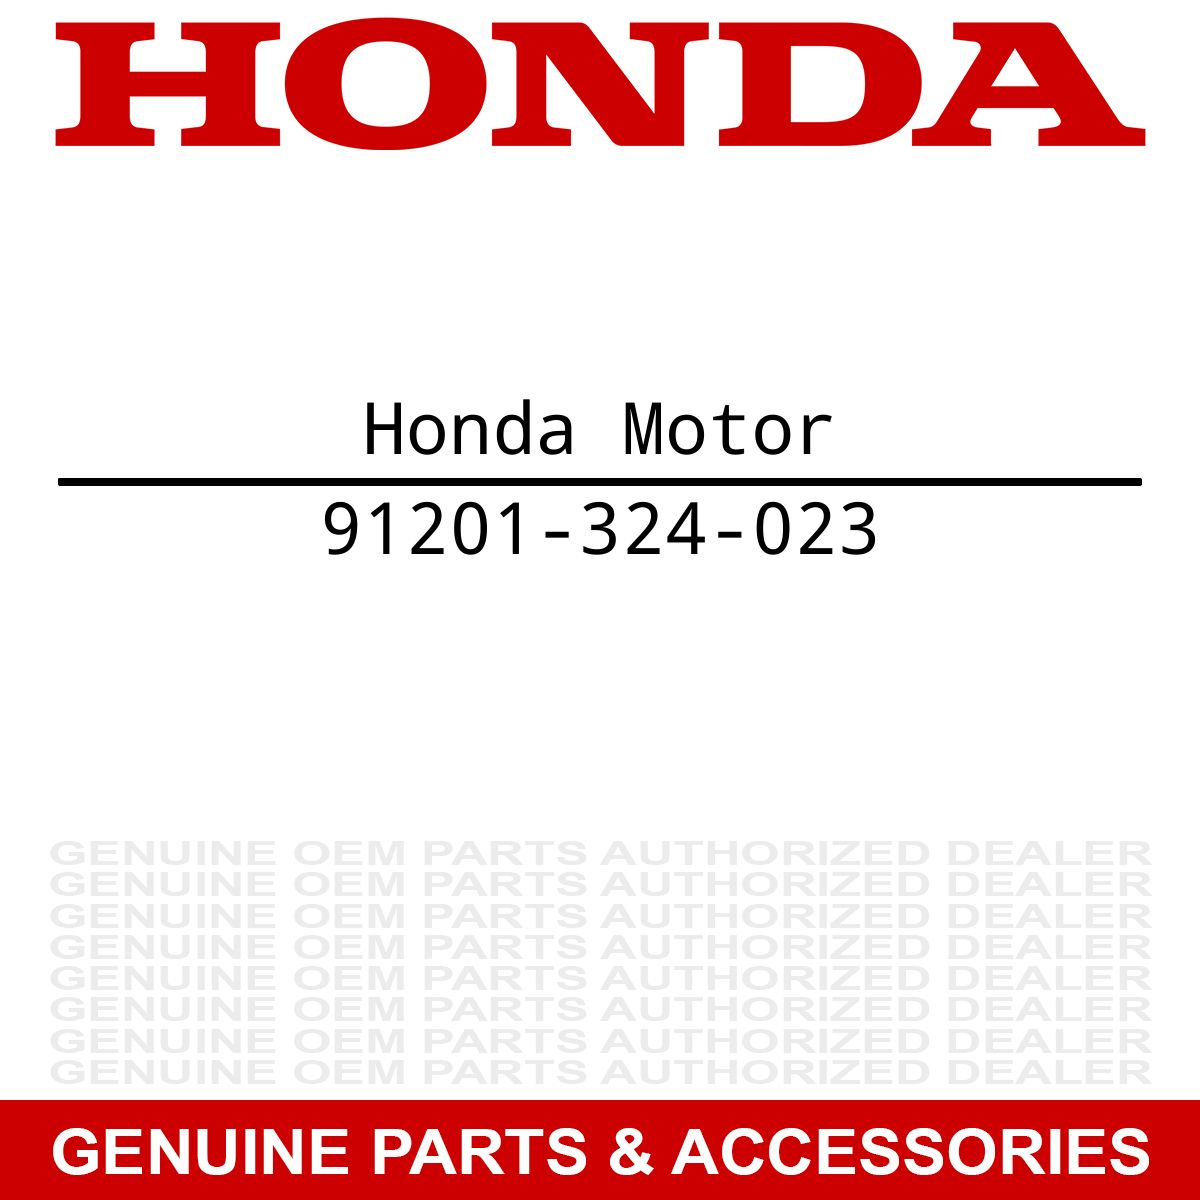 Honda 91201-324-023 Oil Seal NSR50 NS50F 125 360 400 50 Four